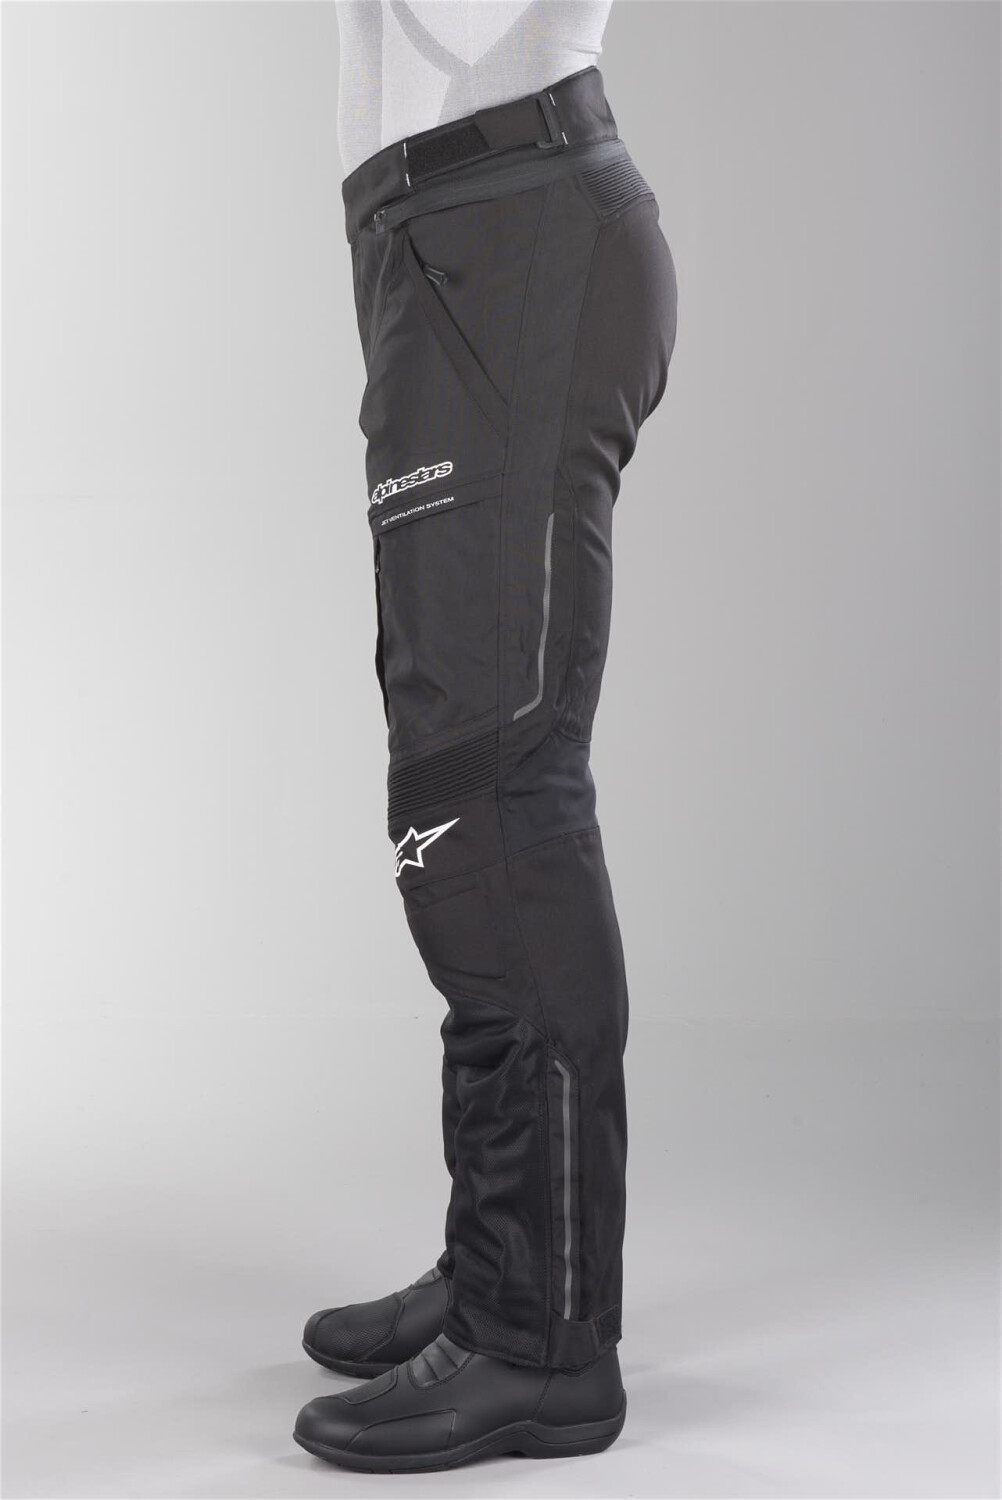 Buy Alpinestars Ramjet Air Pants black from £164.84 (Today) – Best